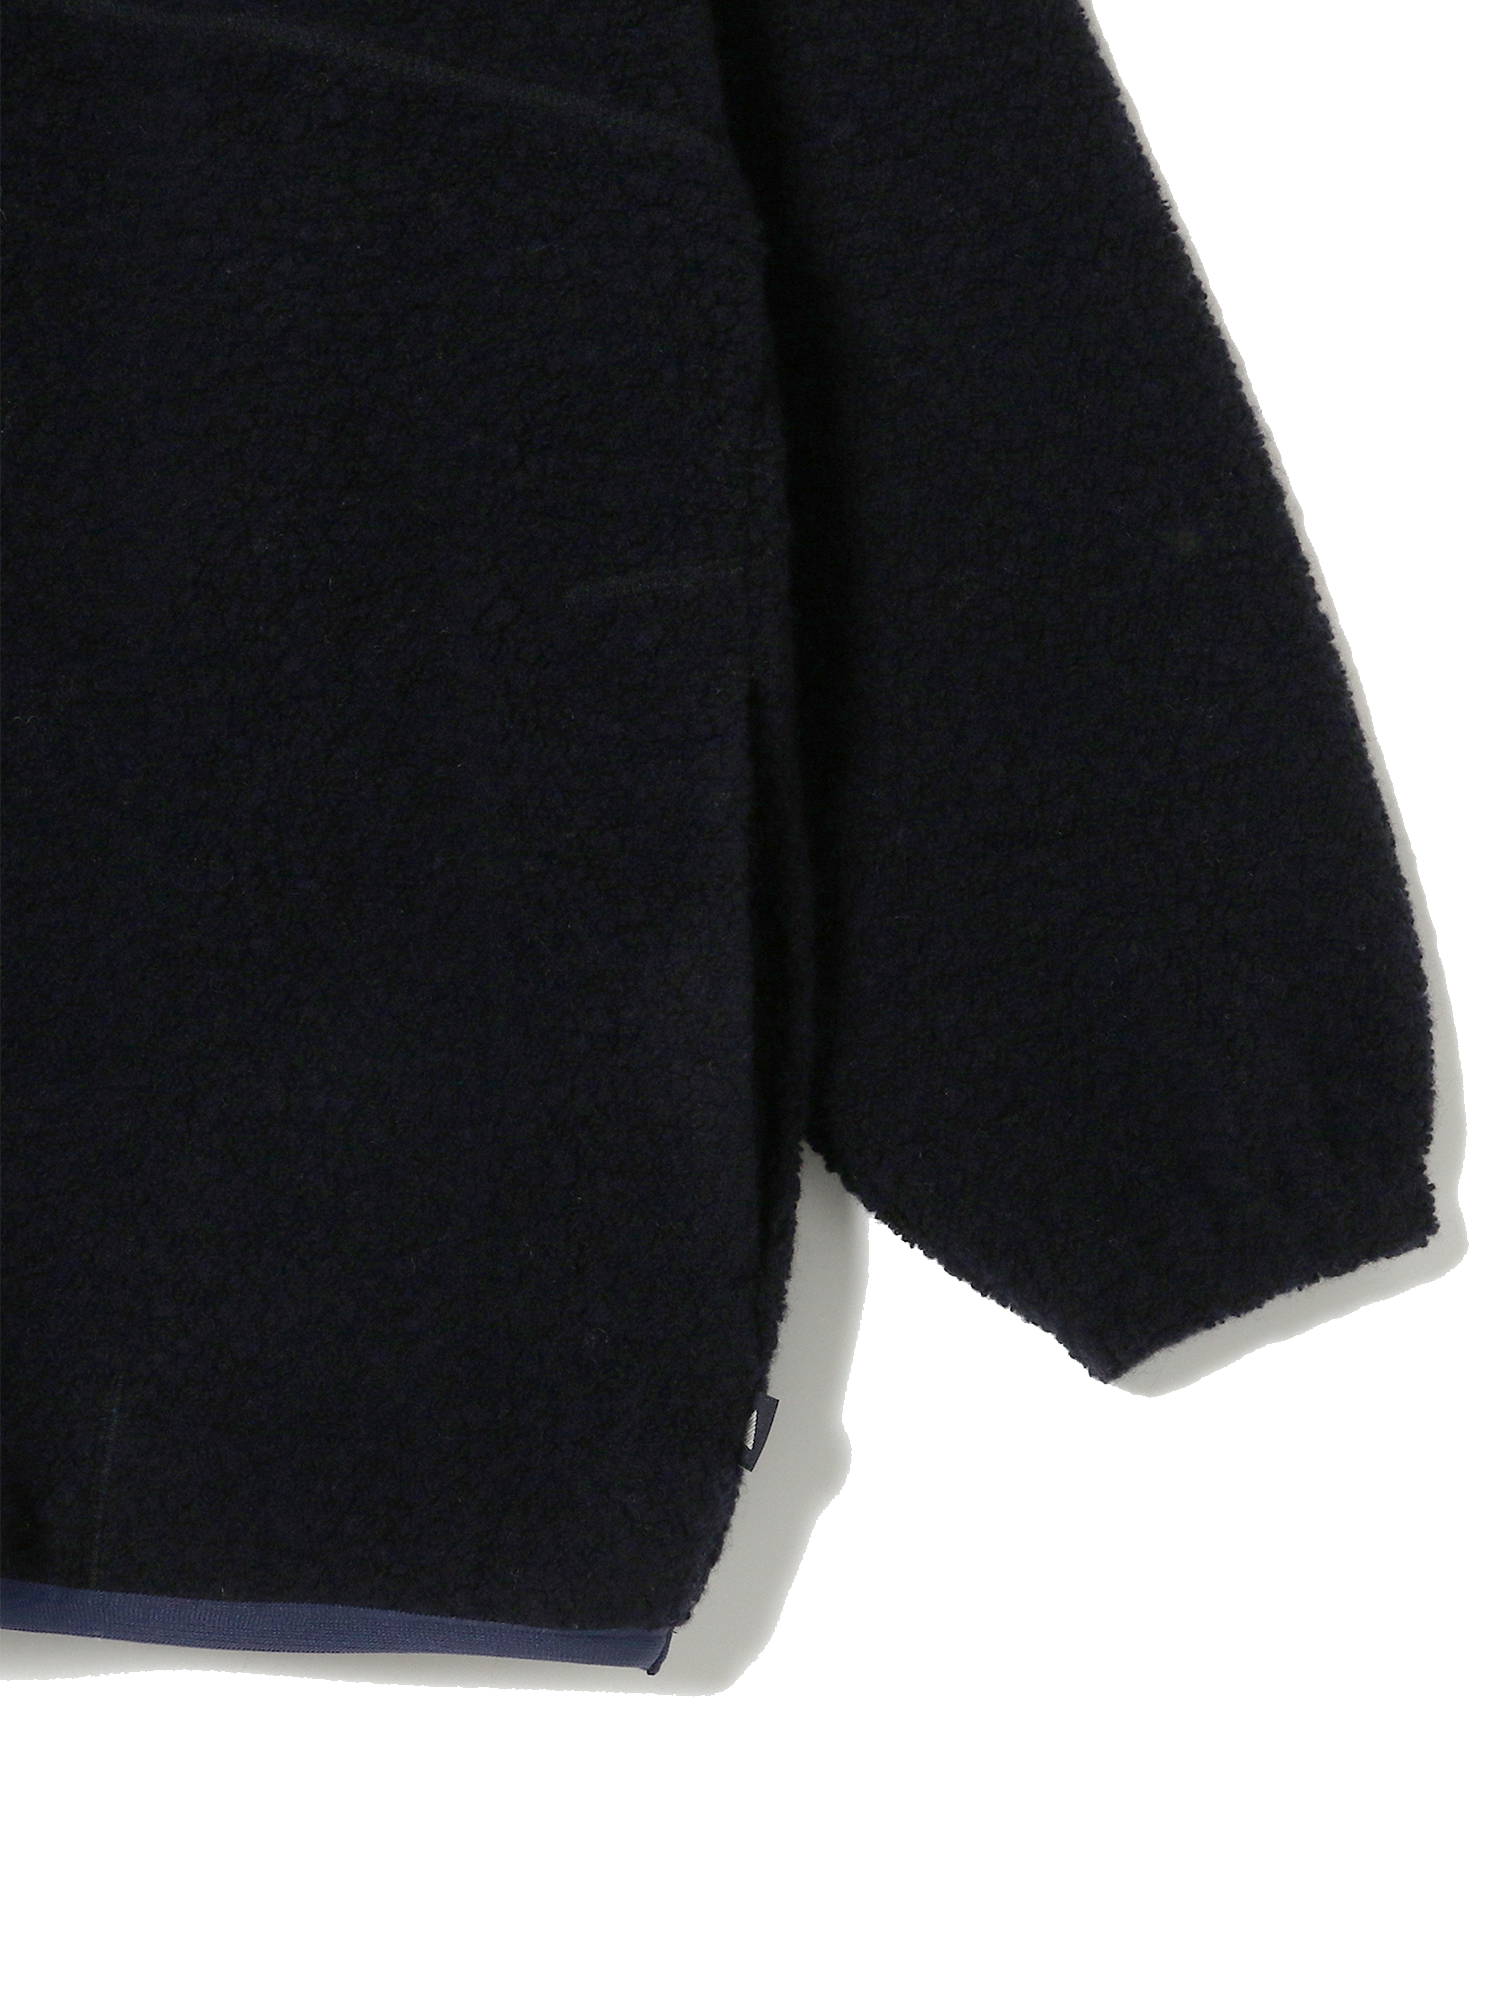 Pilgrim Surf + Supply - Jacket - Conrad Hooded Quarter Zip - Navy